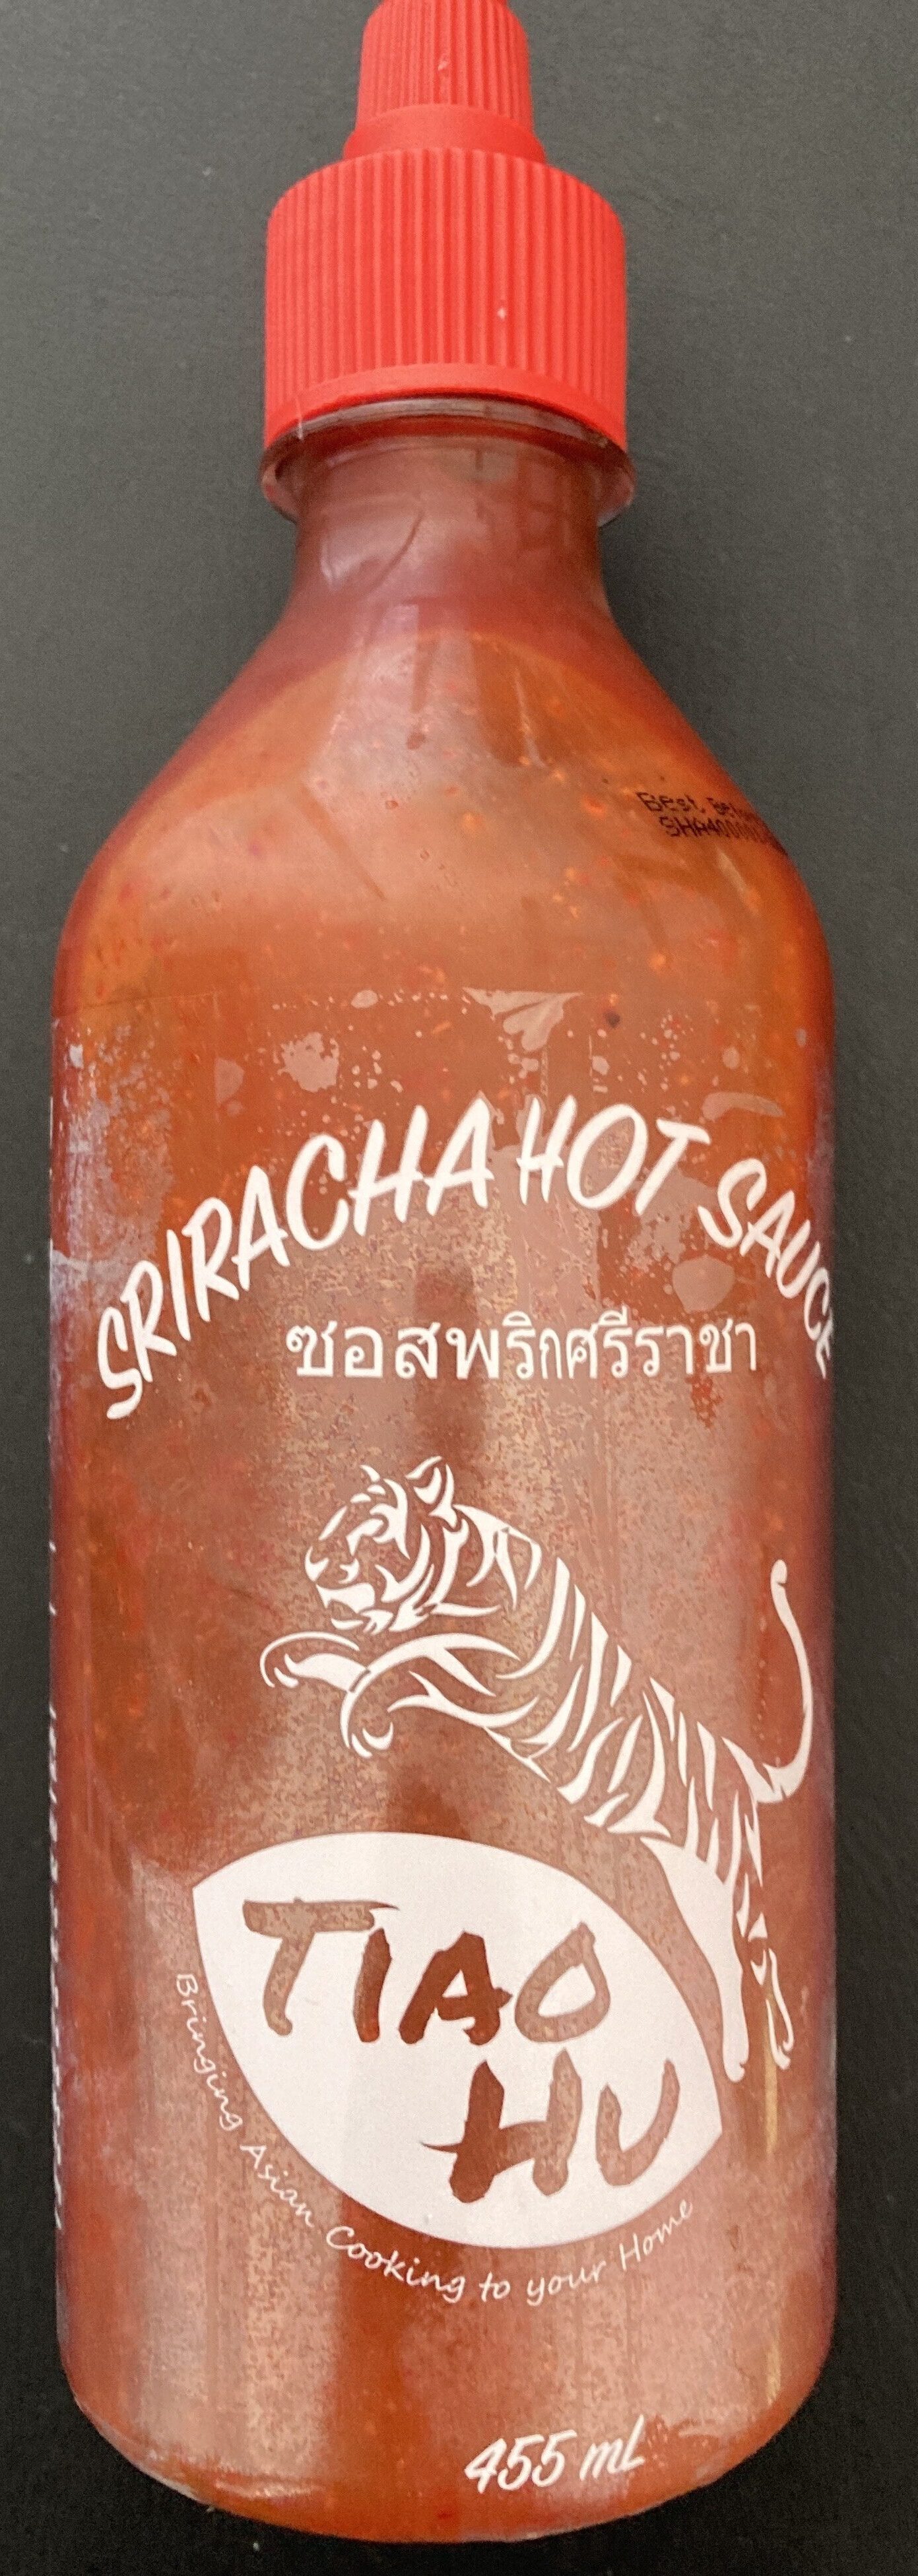 Sriracha Hot Sauce - Product